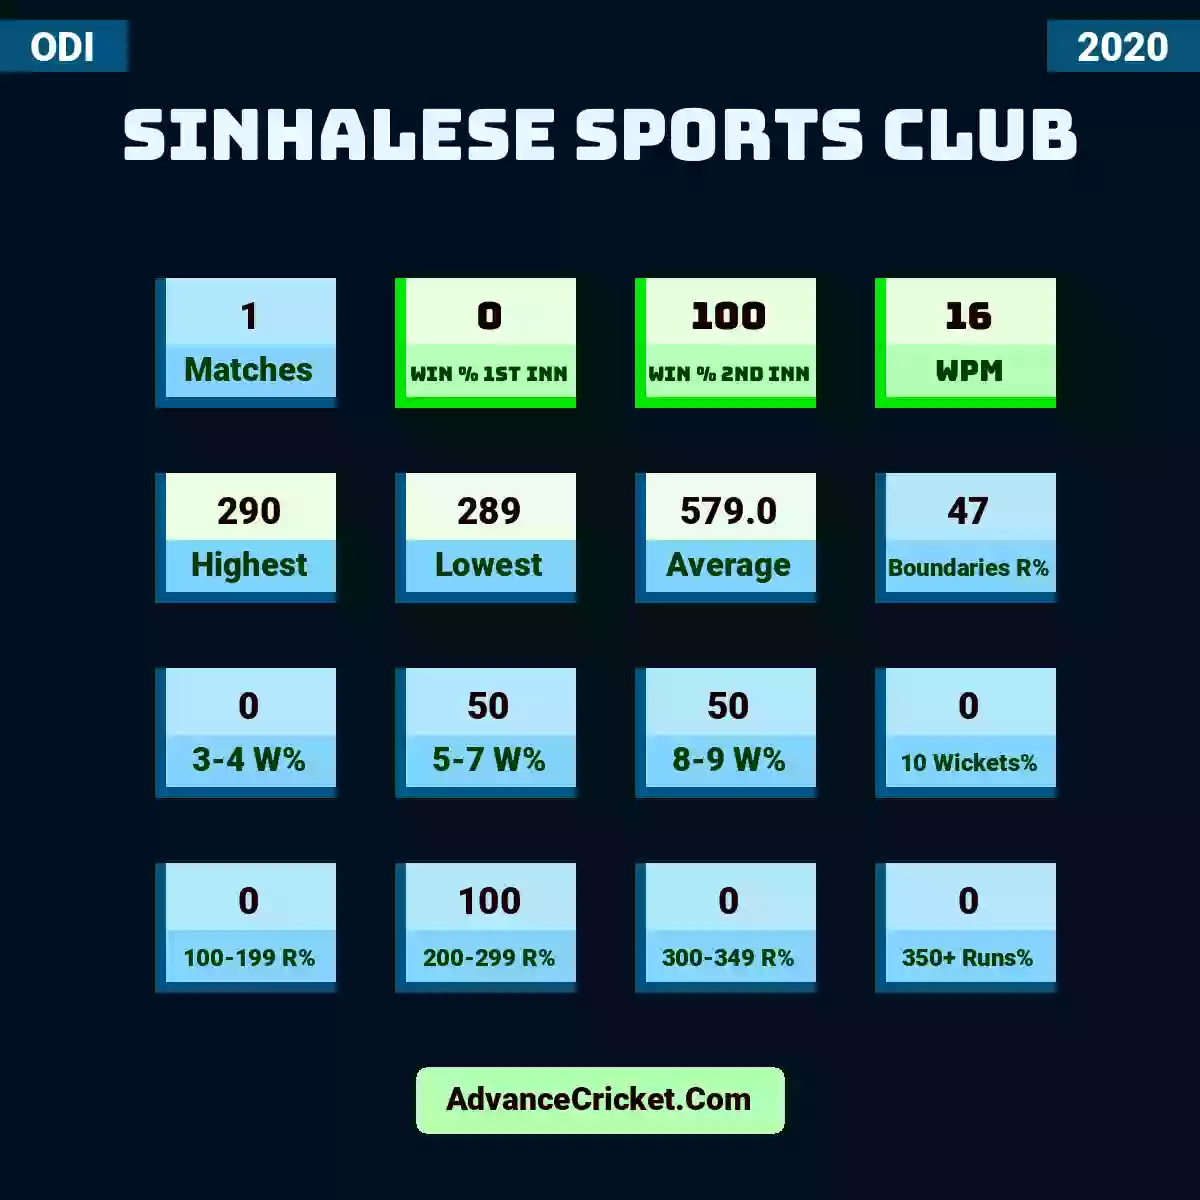 Image showing Sinhalese Sports Club with Matches: 1, Win % 1st Inn: 0, Win % 2nd Inn: 100, WPM: 16, Highest: 290, Lowest: 289, Average: 579.0, Boundaries R%: 47, 3-4 W%: 0, 5-7 W%: 50, 8-9 W%: 50, 10 Wickets%: 0, 100-199 R%: 0, 200-299 R%: 100, 300-349 R%: 0, 350+ Runs%: 0.